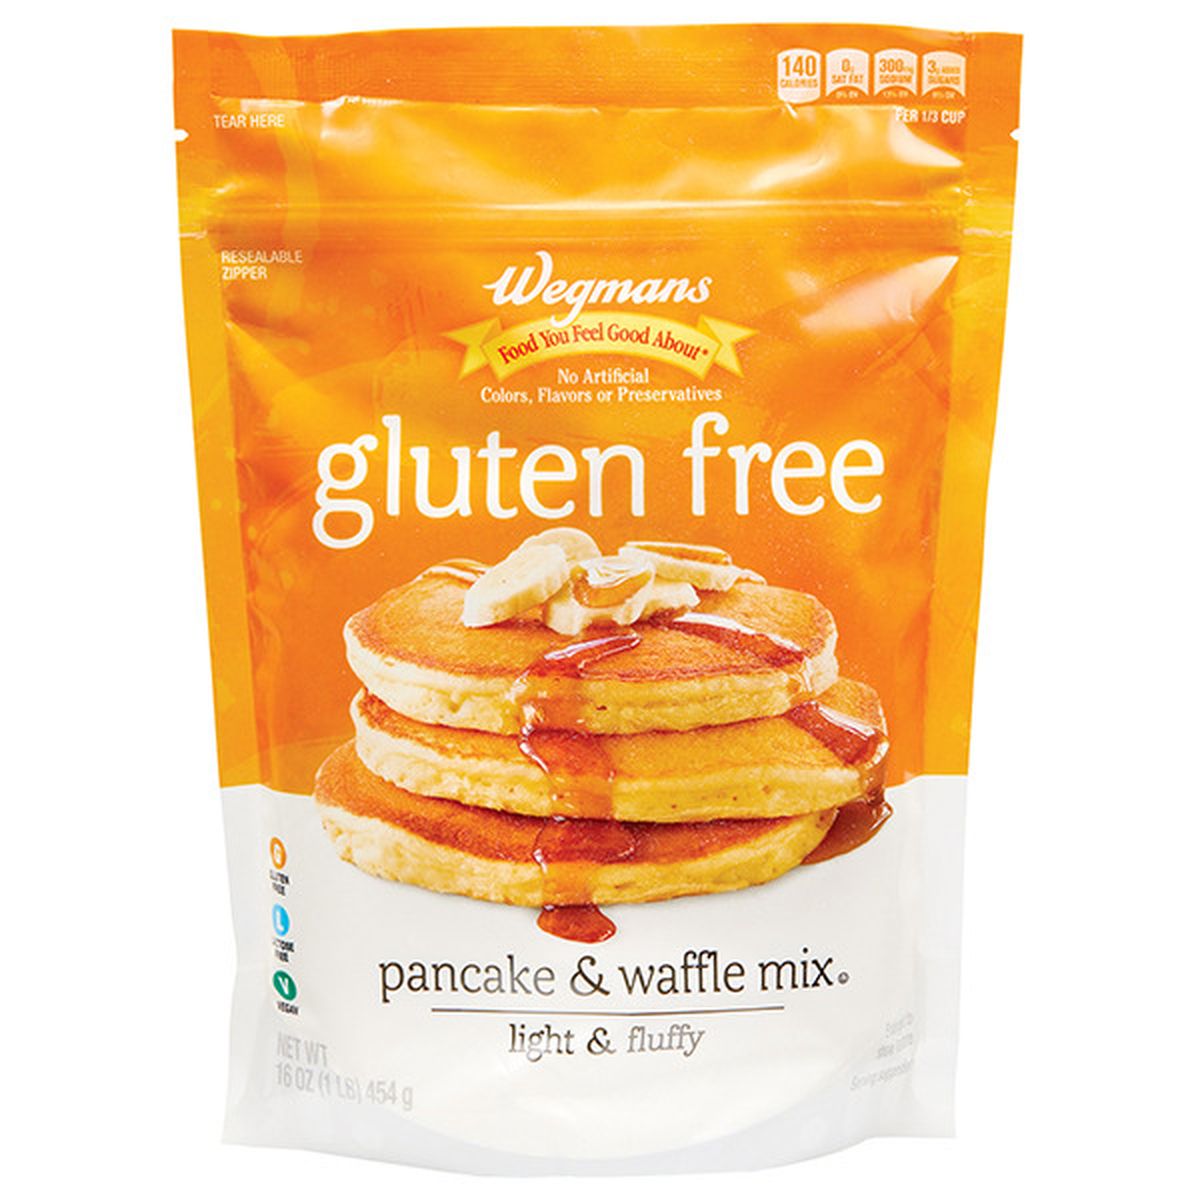 Calories in Wegmans Gluten Free Pancake & Waffle Mix